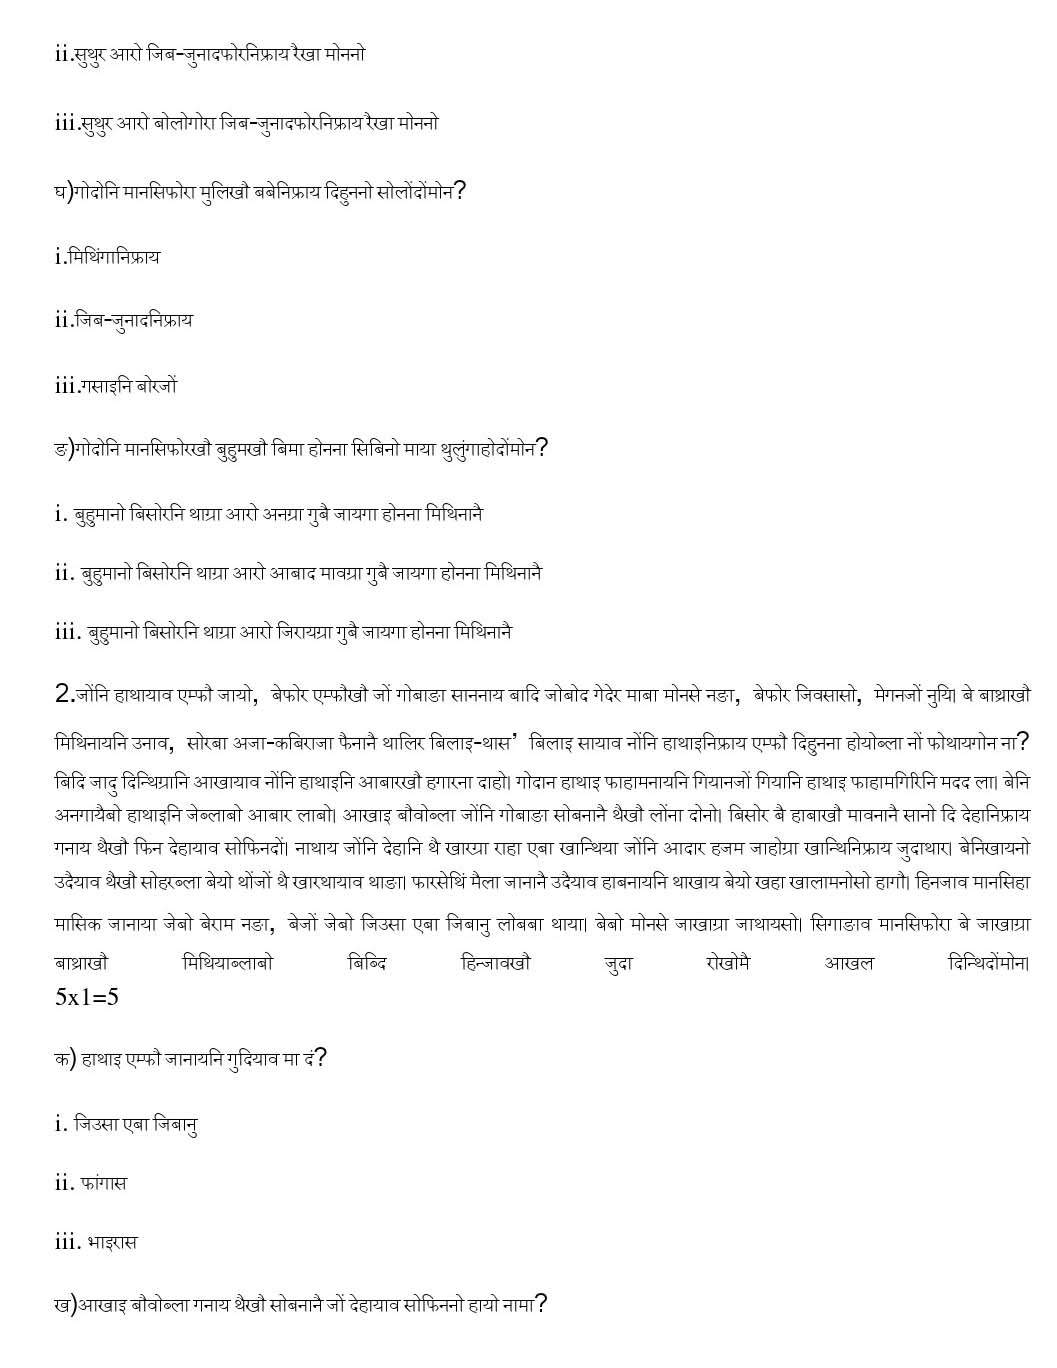 Bodo CBSE Class X Sample Question Paper 2018-19 - Image 2